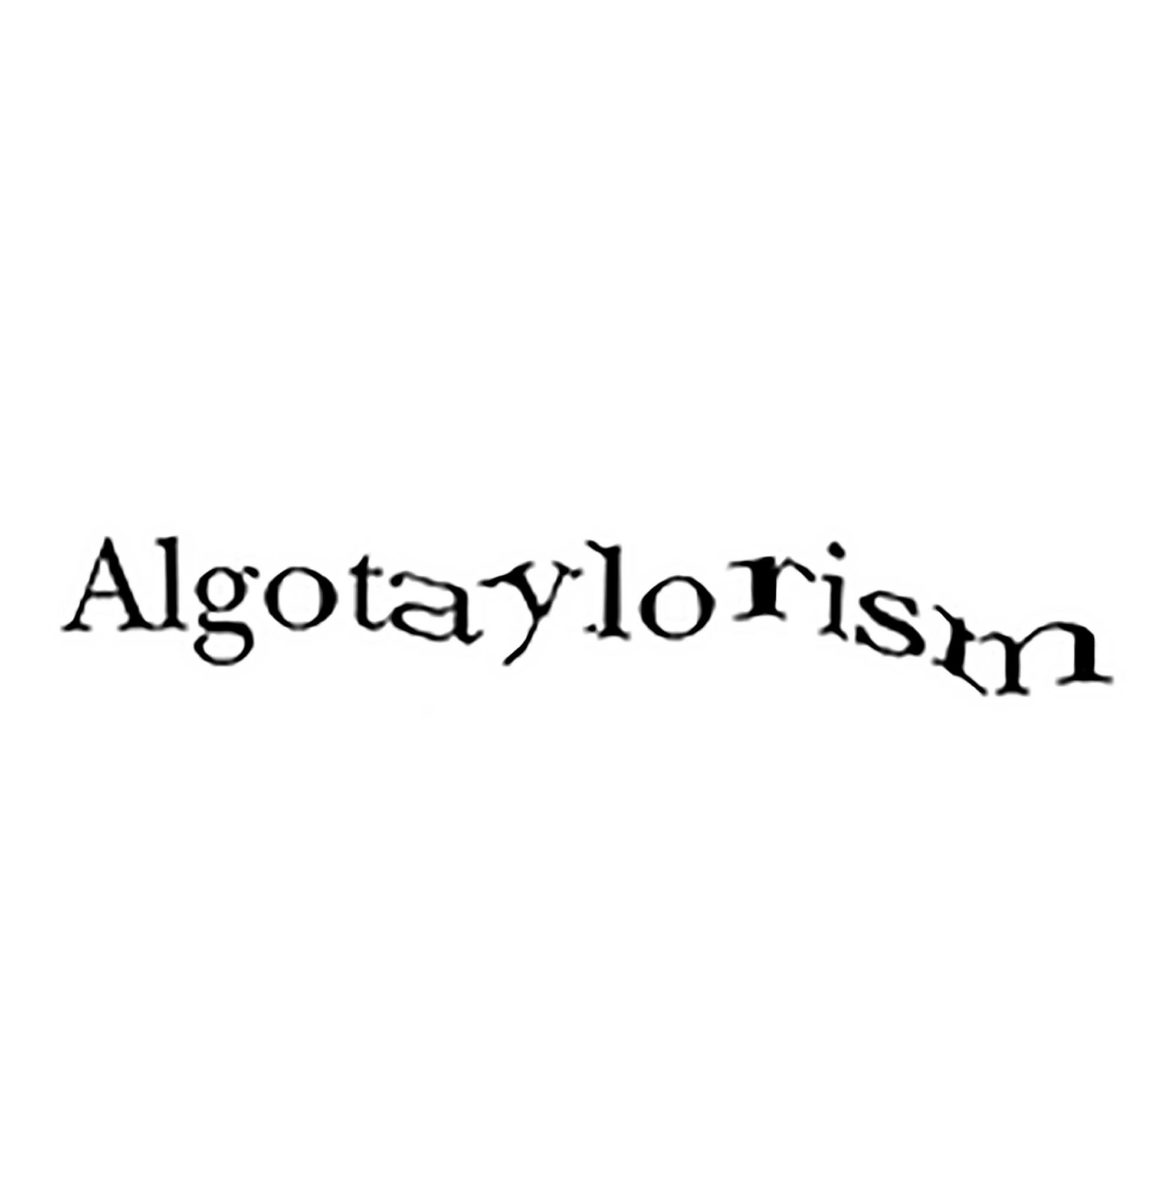 Algotaylorism